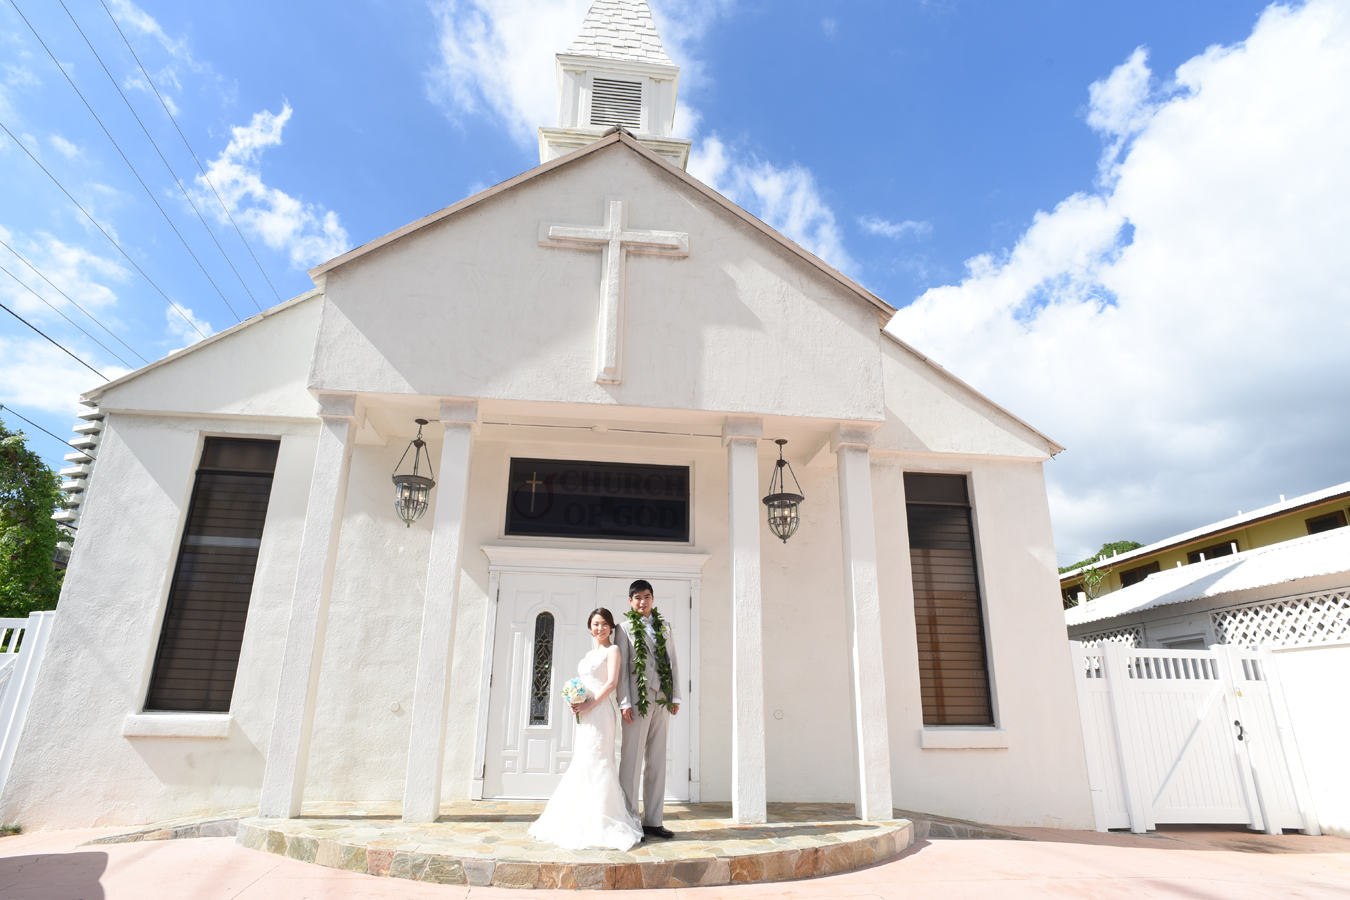 Hawaii Wedding Chapel: Hawaii Wedding Chapel: Takao & Reina